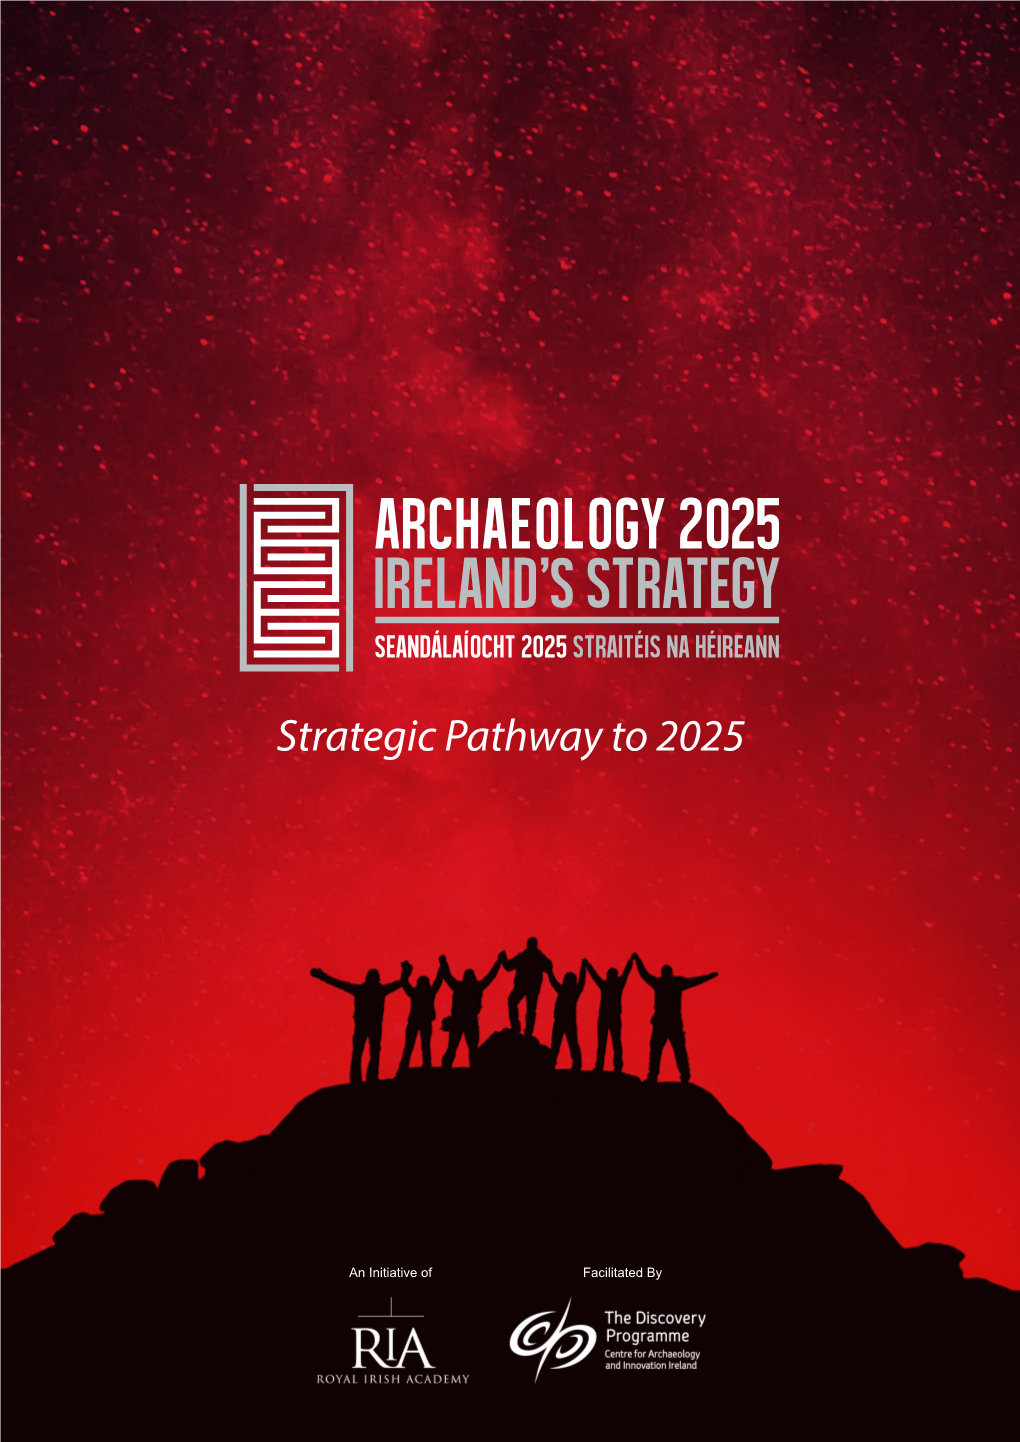 Archaeology 2025 Ireland's Strategy